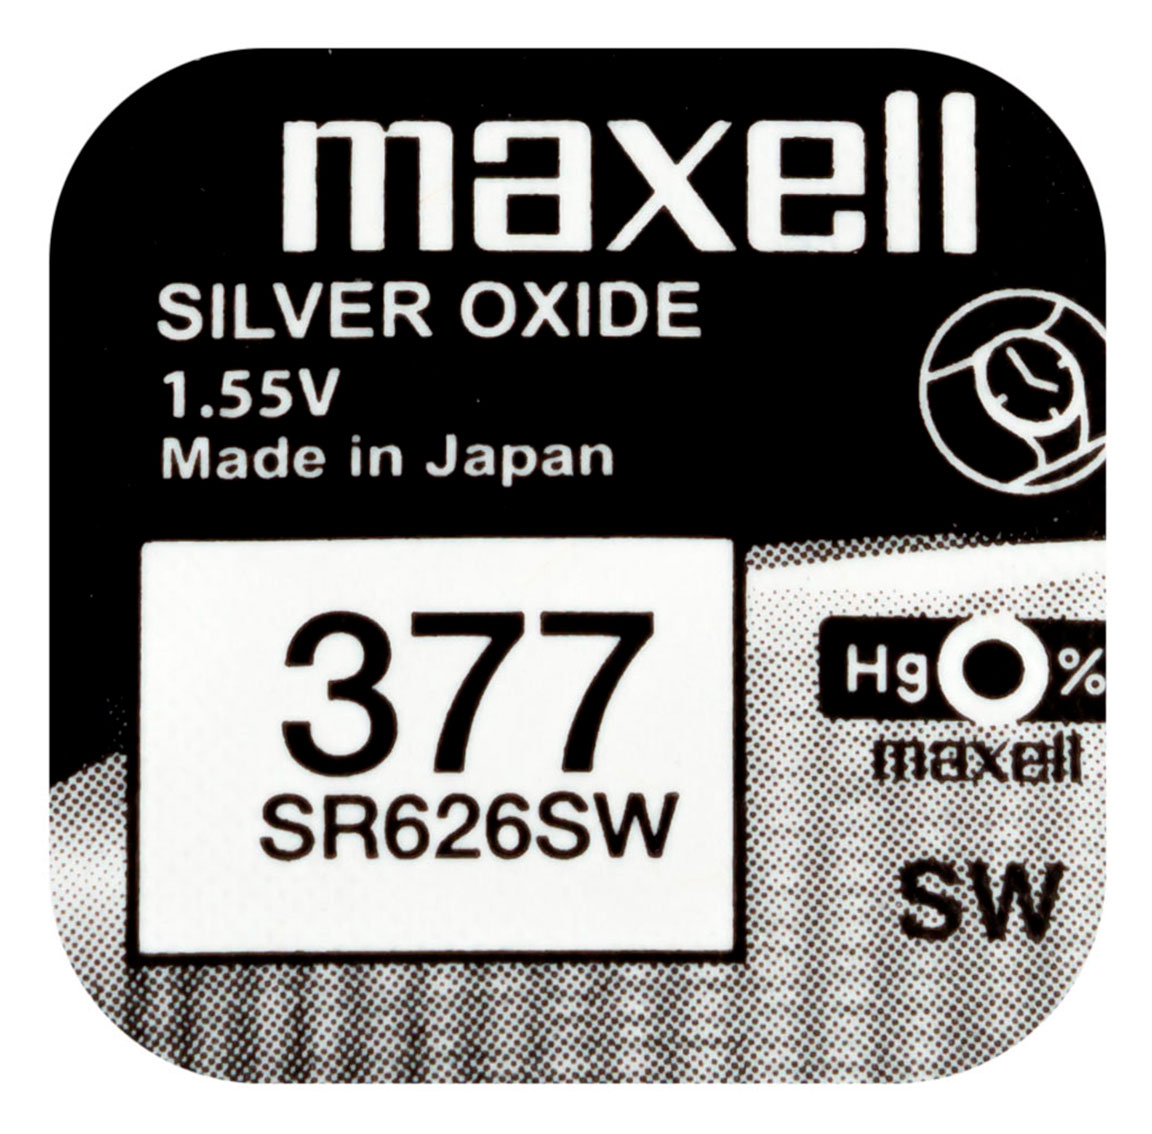 Maxell SR626SW silver oxide battery 377 